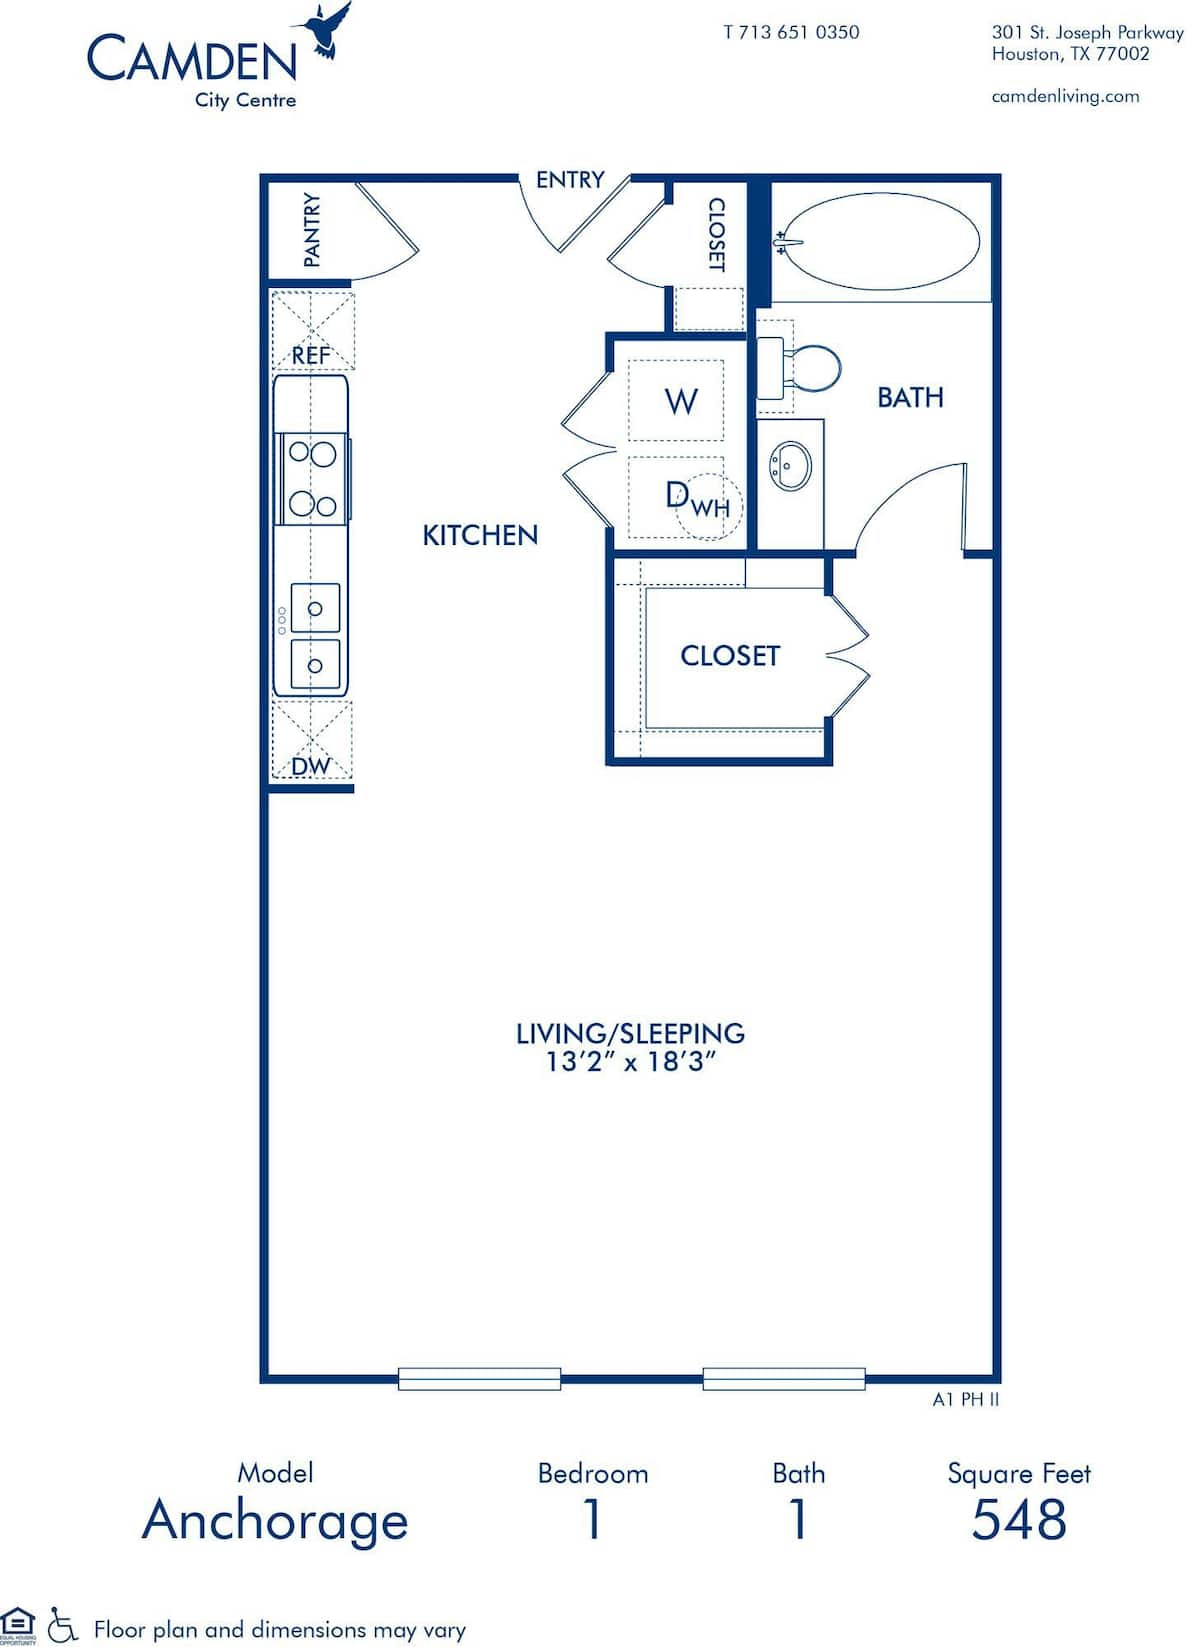 Floorplan diagram for Anchorage II, showing Studio